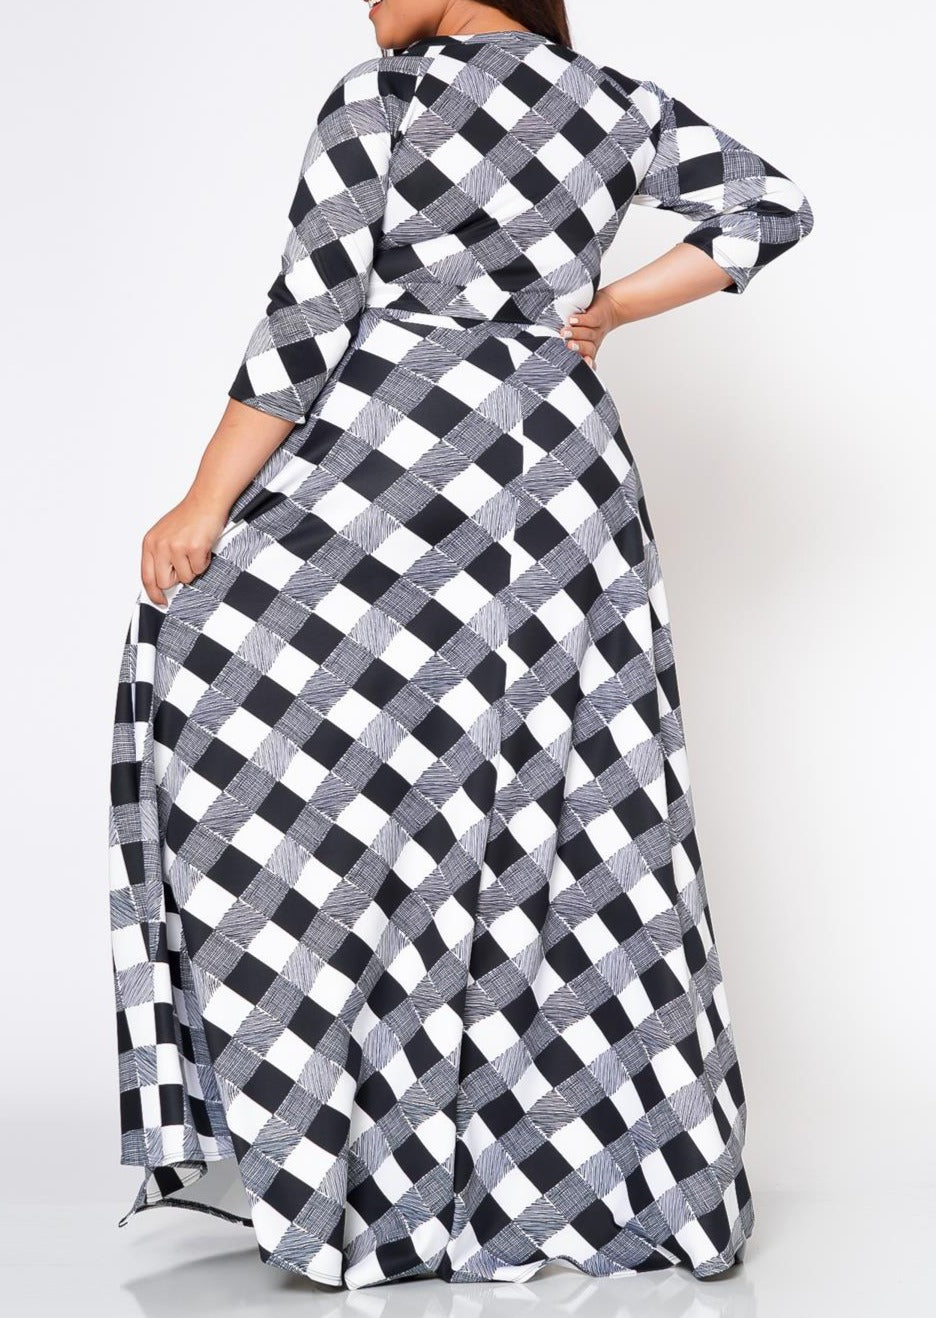 HI Curvy Plus Size Women Flare Plaid Pattern Maxi Dress with Pockets